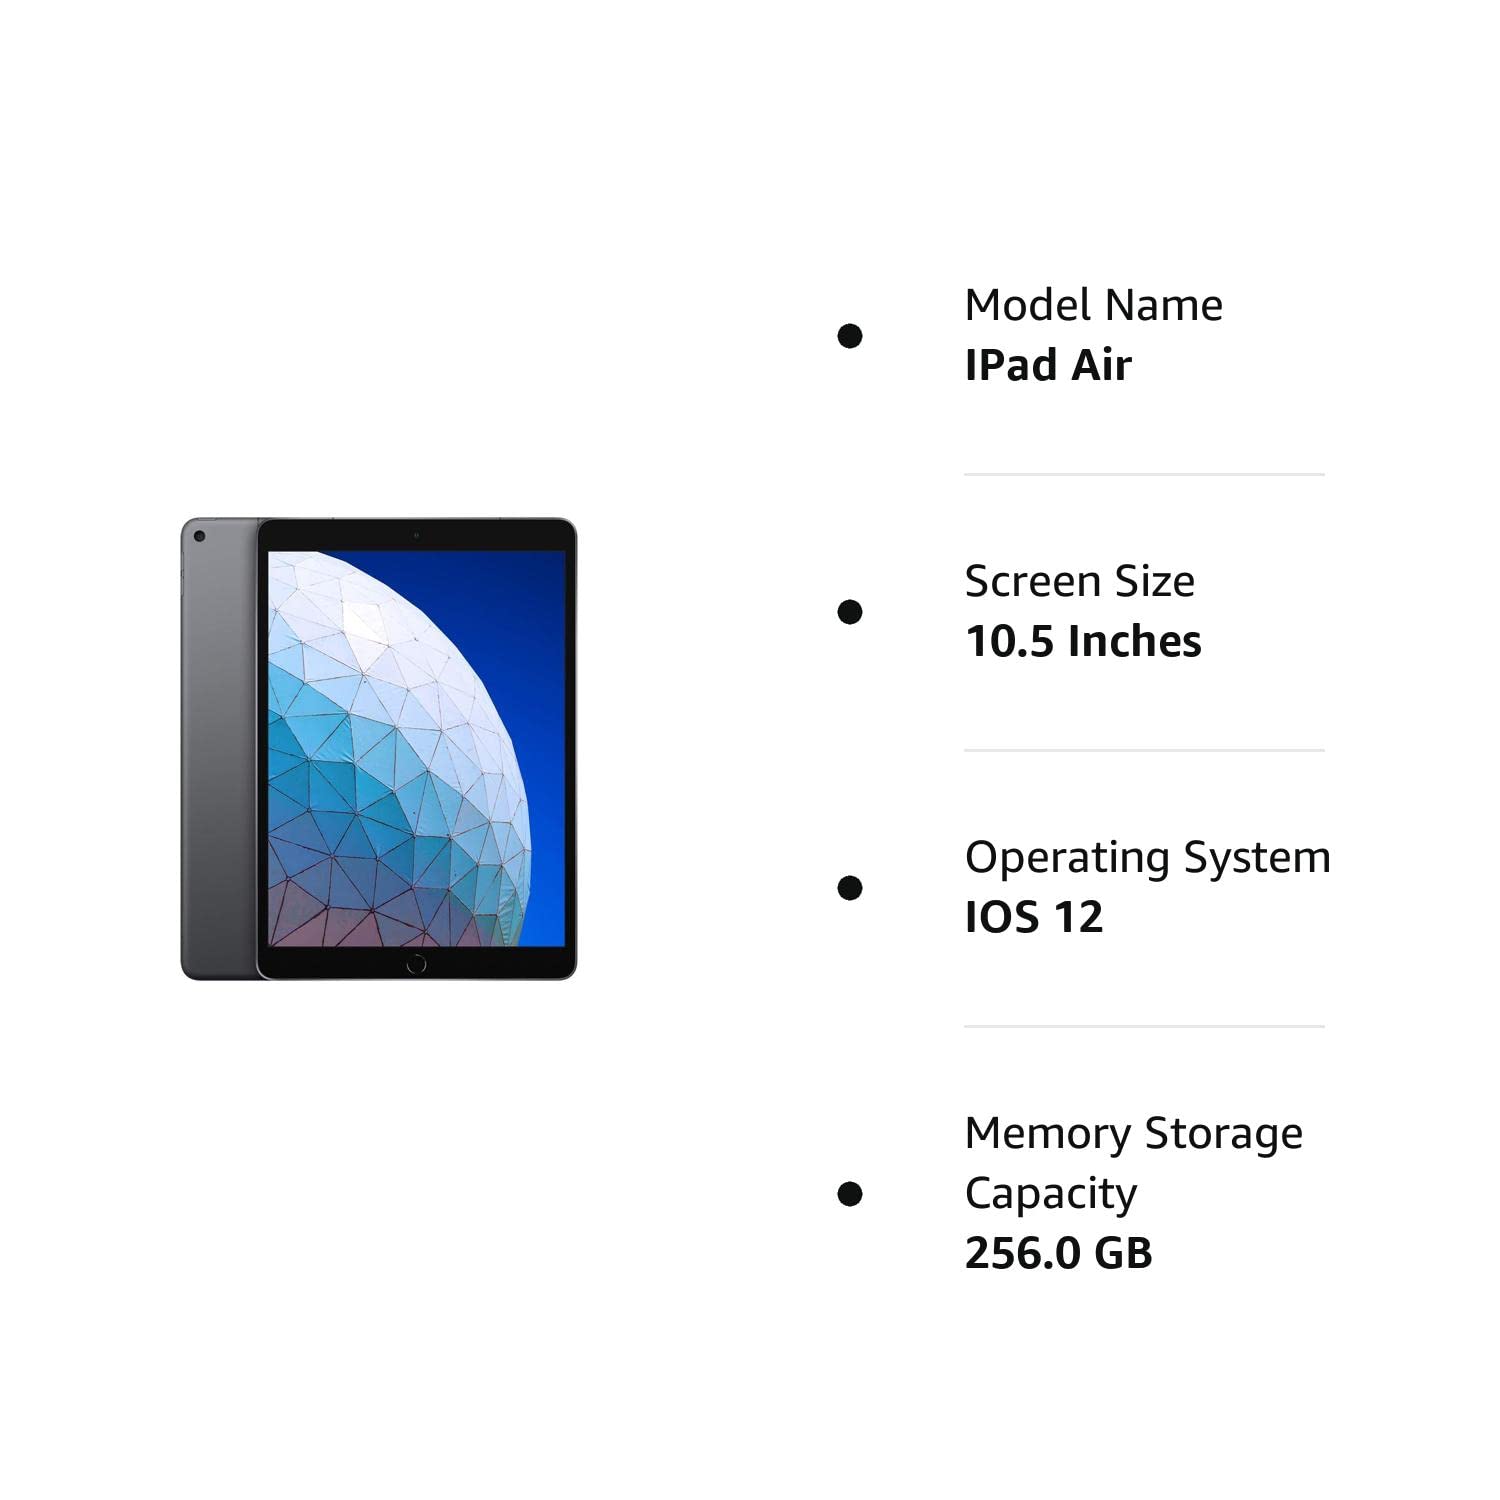 Apple iPad Air (10.5-inch, Wi-Fi + Cellular, 256GB) - Space Gray (Renewed)